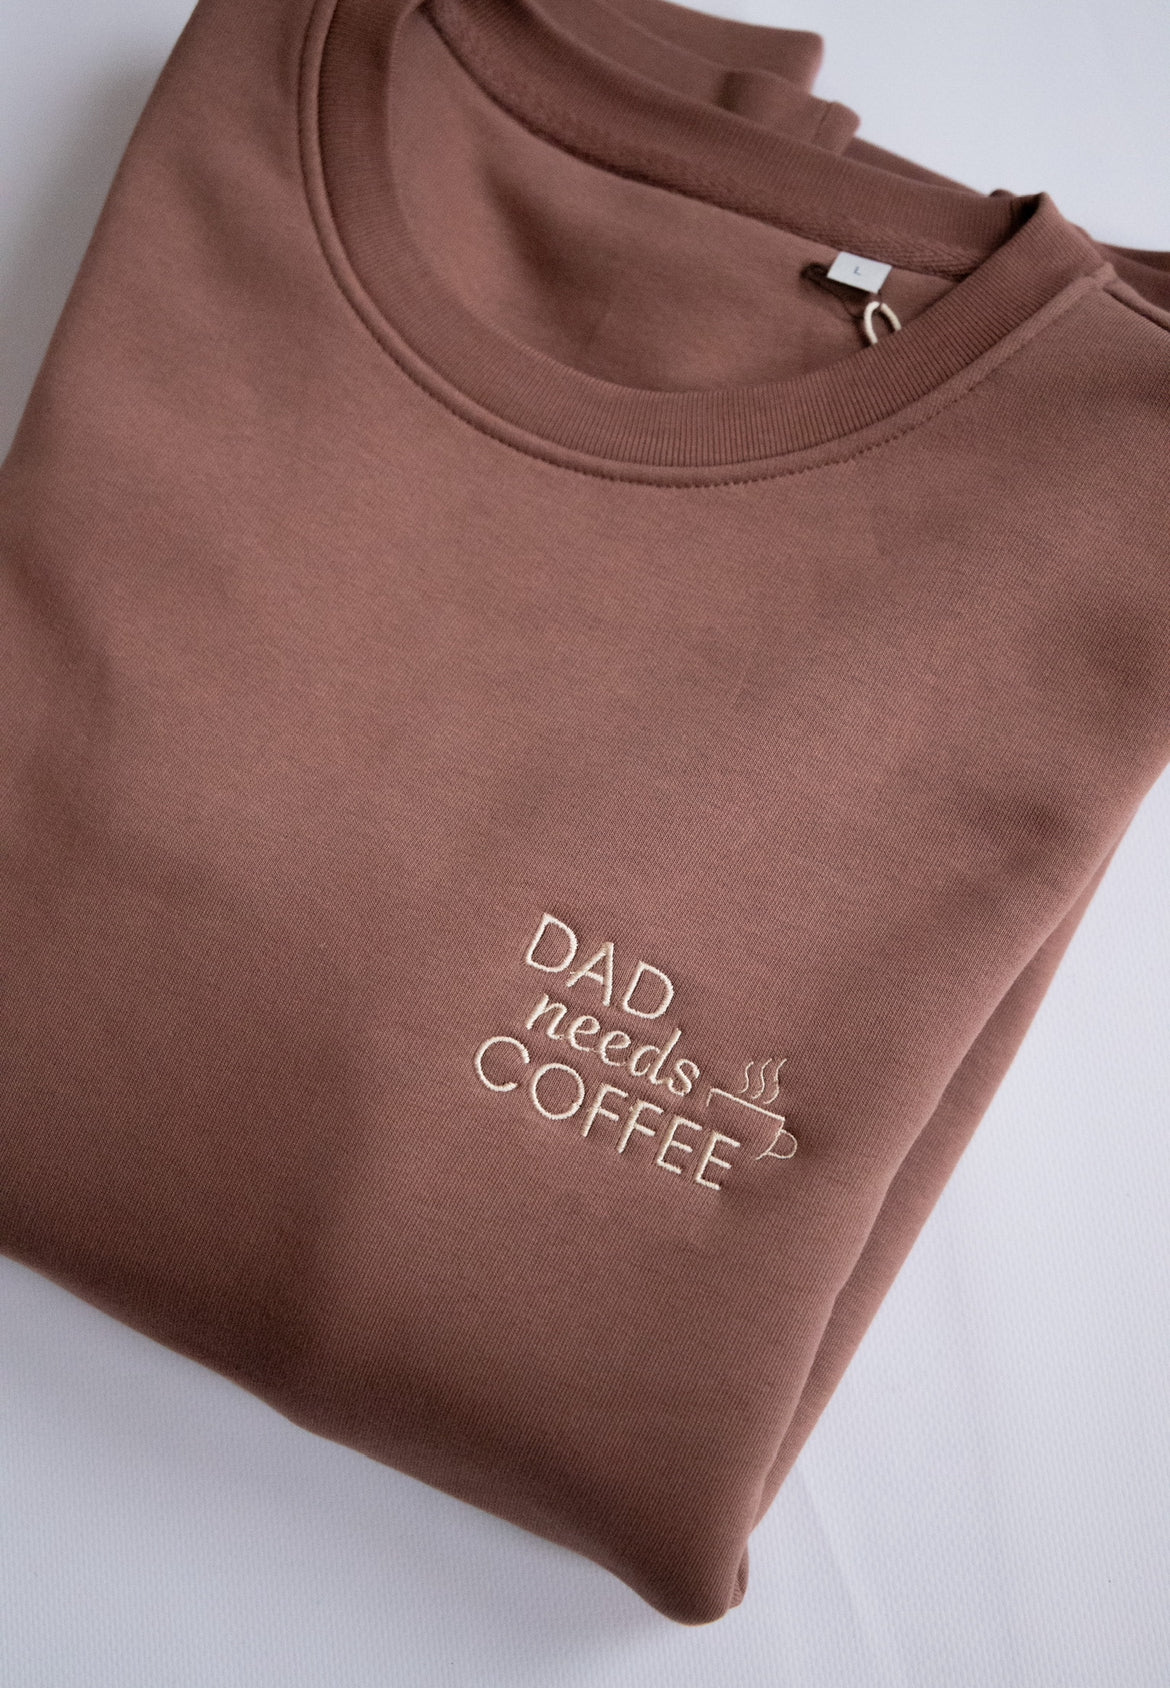 Dad Needs Coffee - Hoodie / Sweater